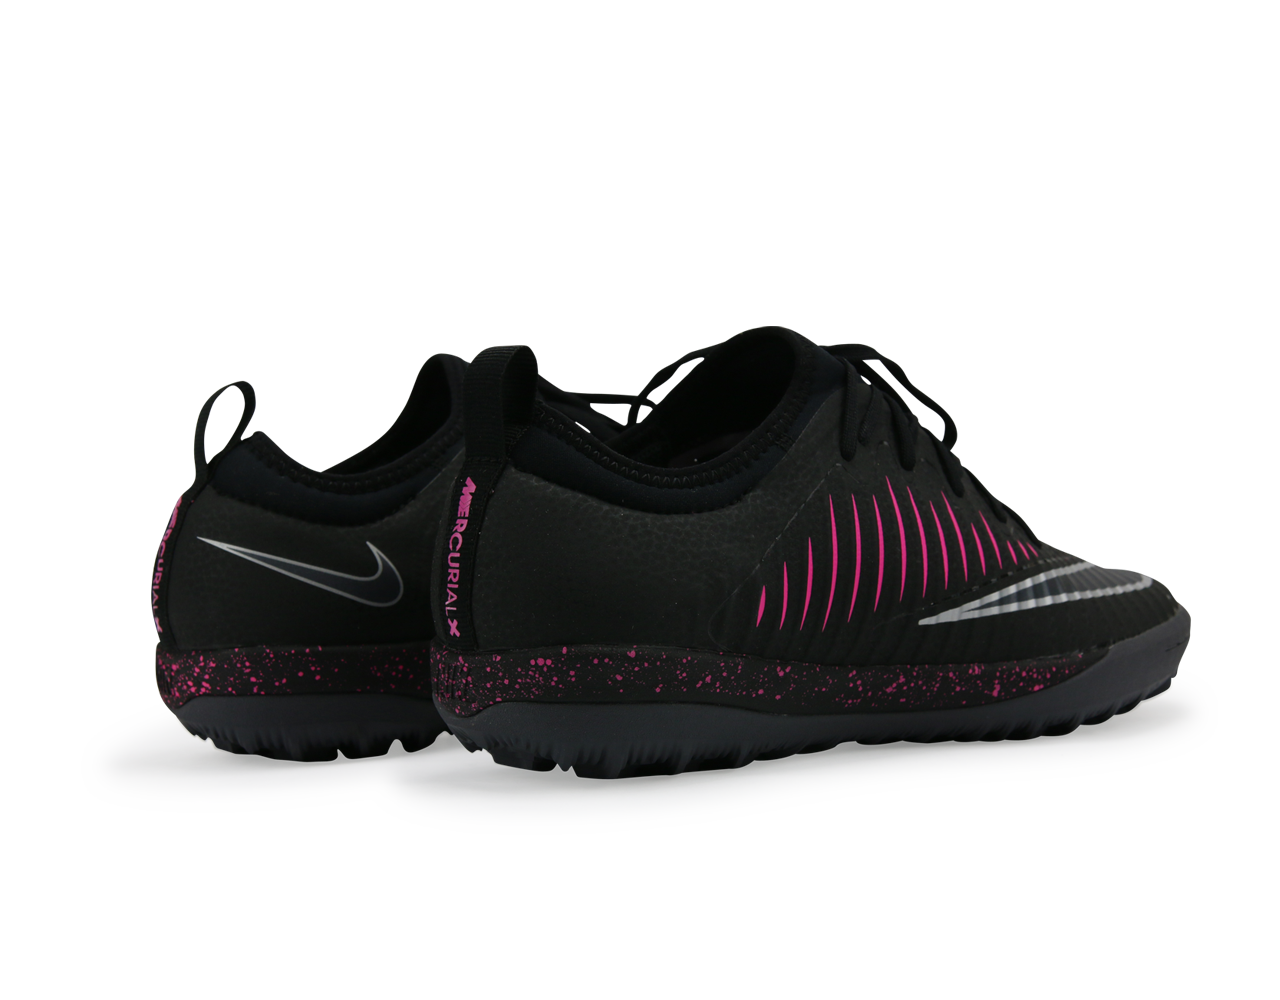 Nike Men's MercurialX Finale II Turf Soccer Shoes Black Pink/Blast Gum/Light Brown